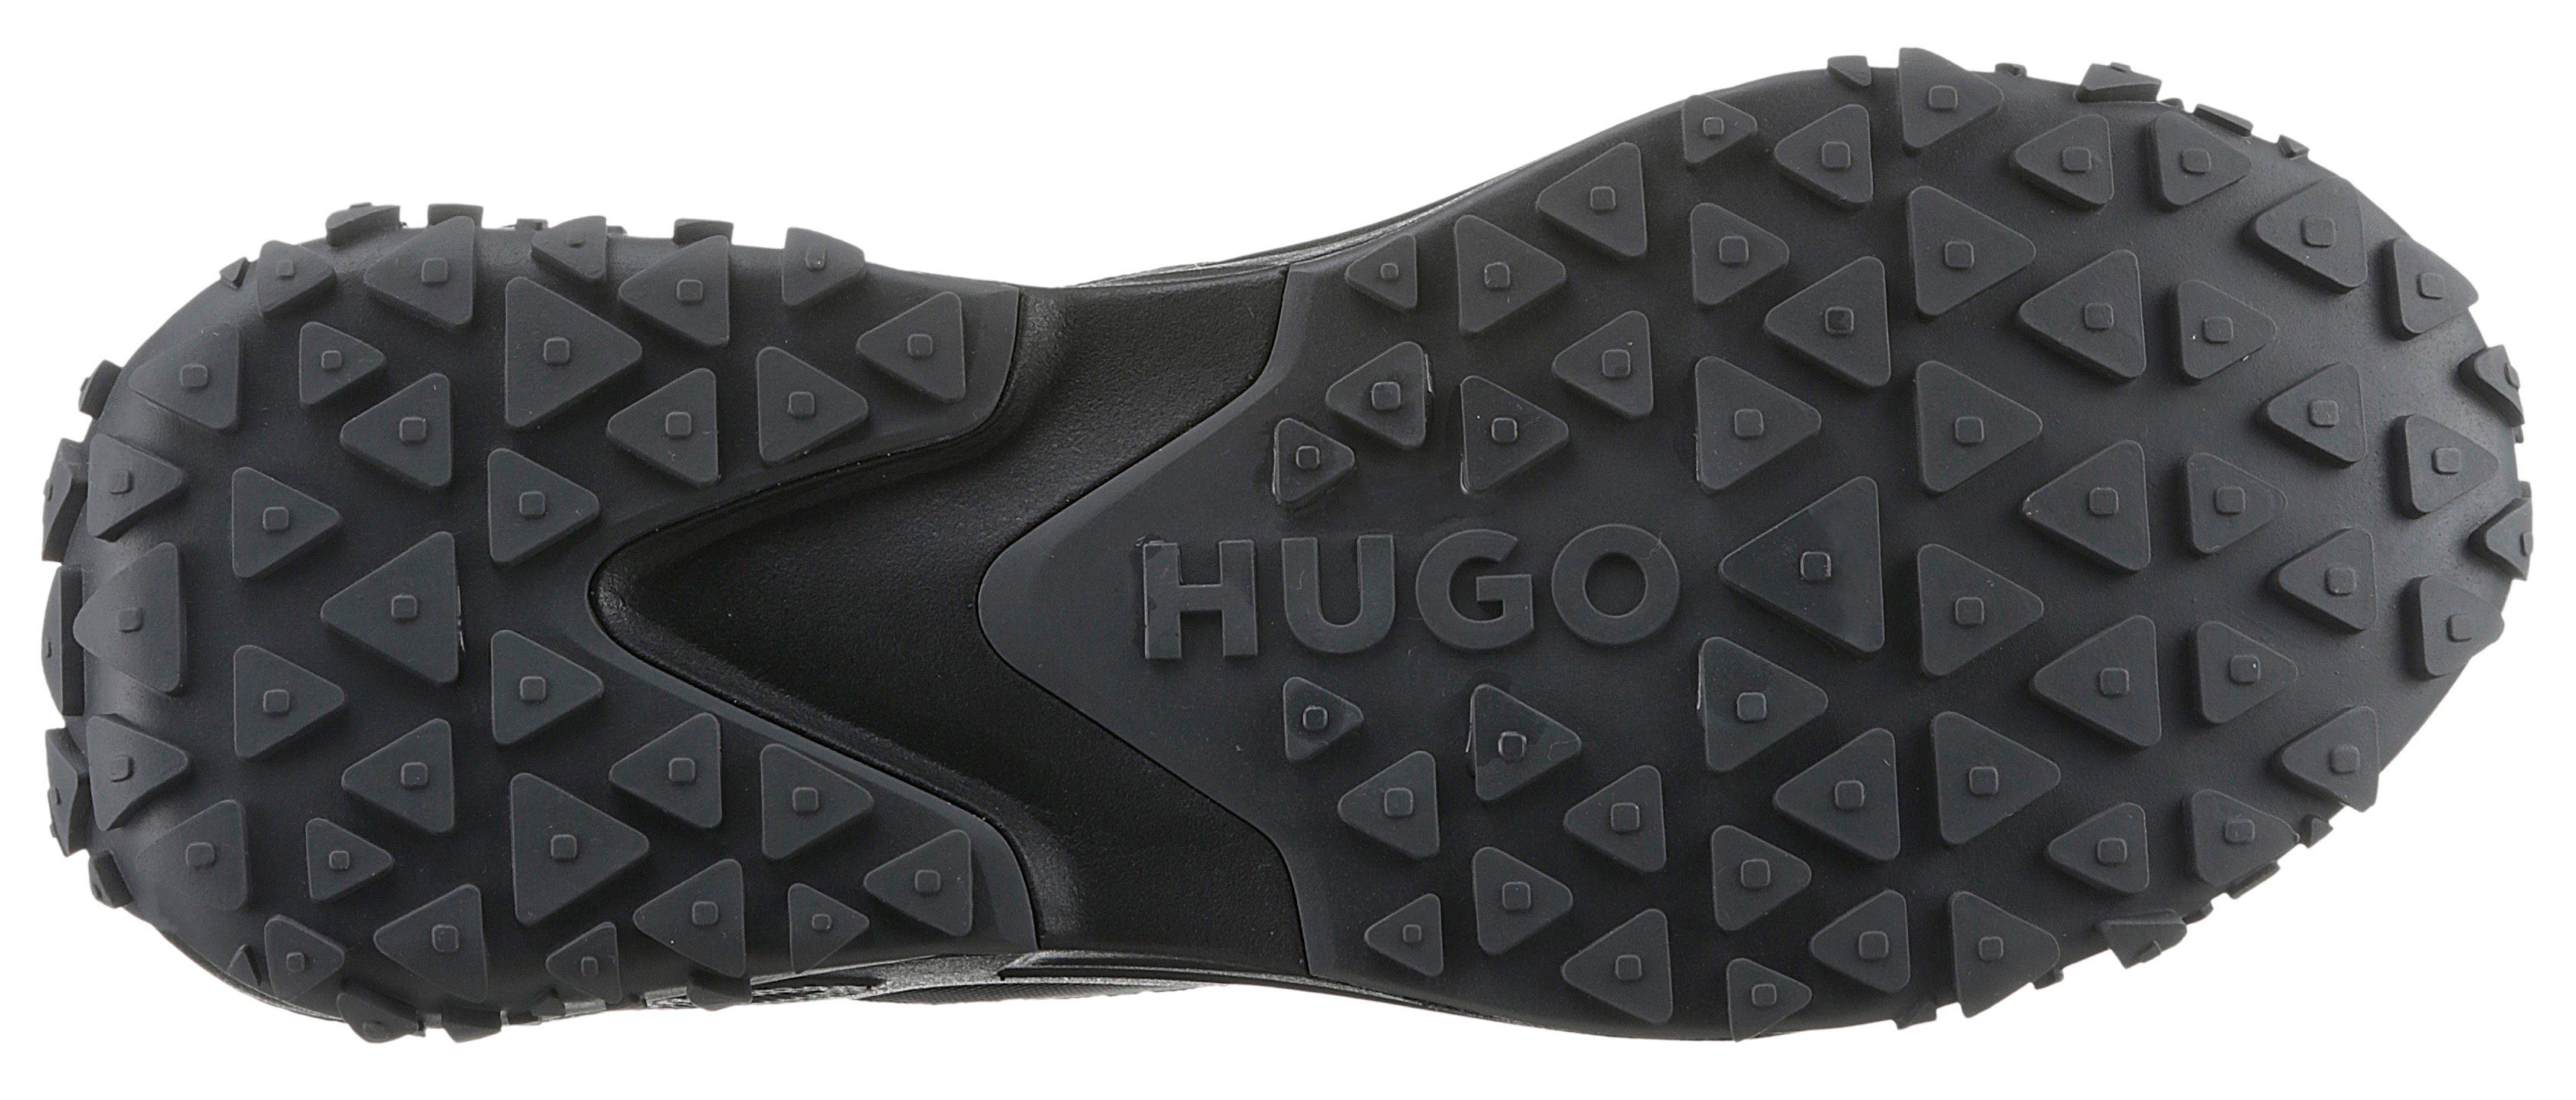 HUGO GO1ST Outdoor für Sneaker